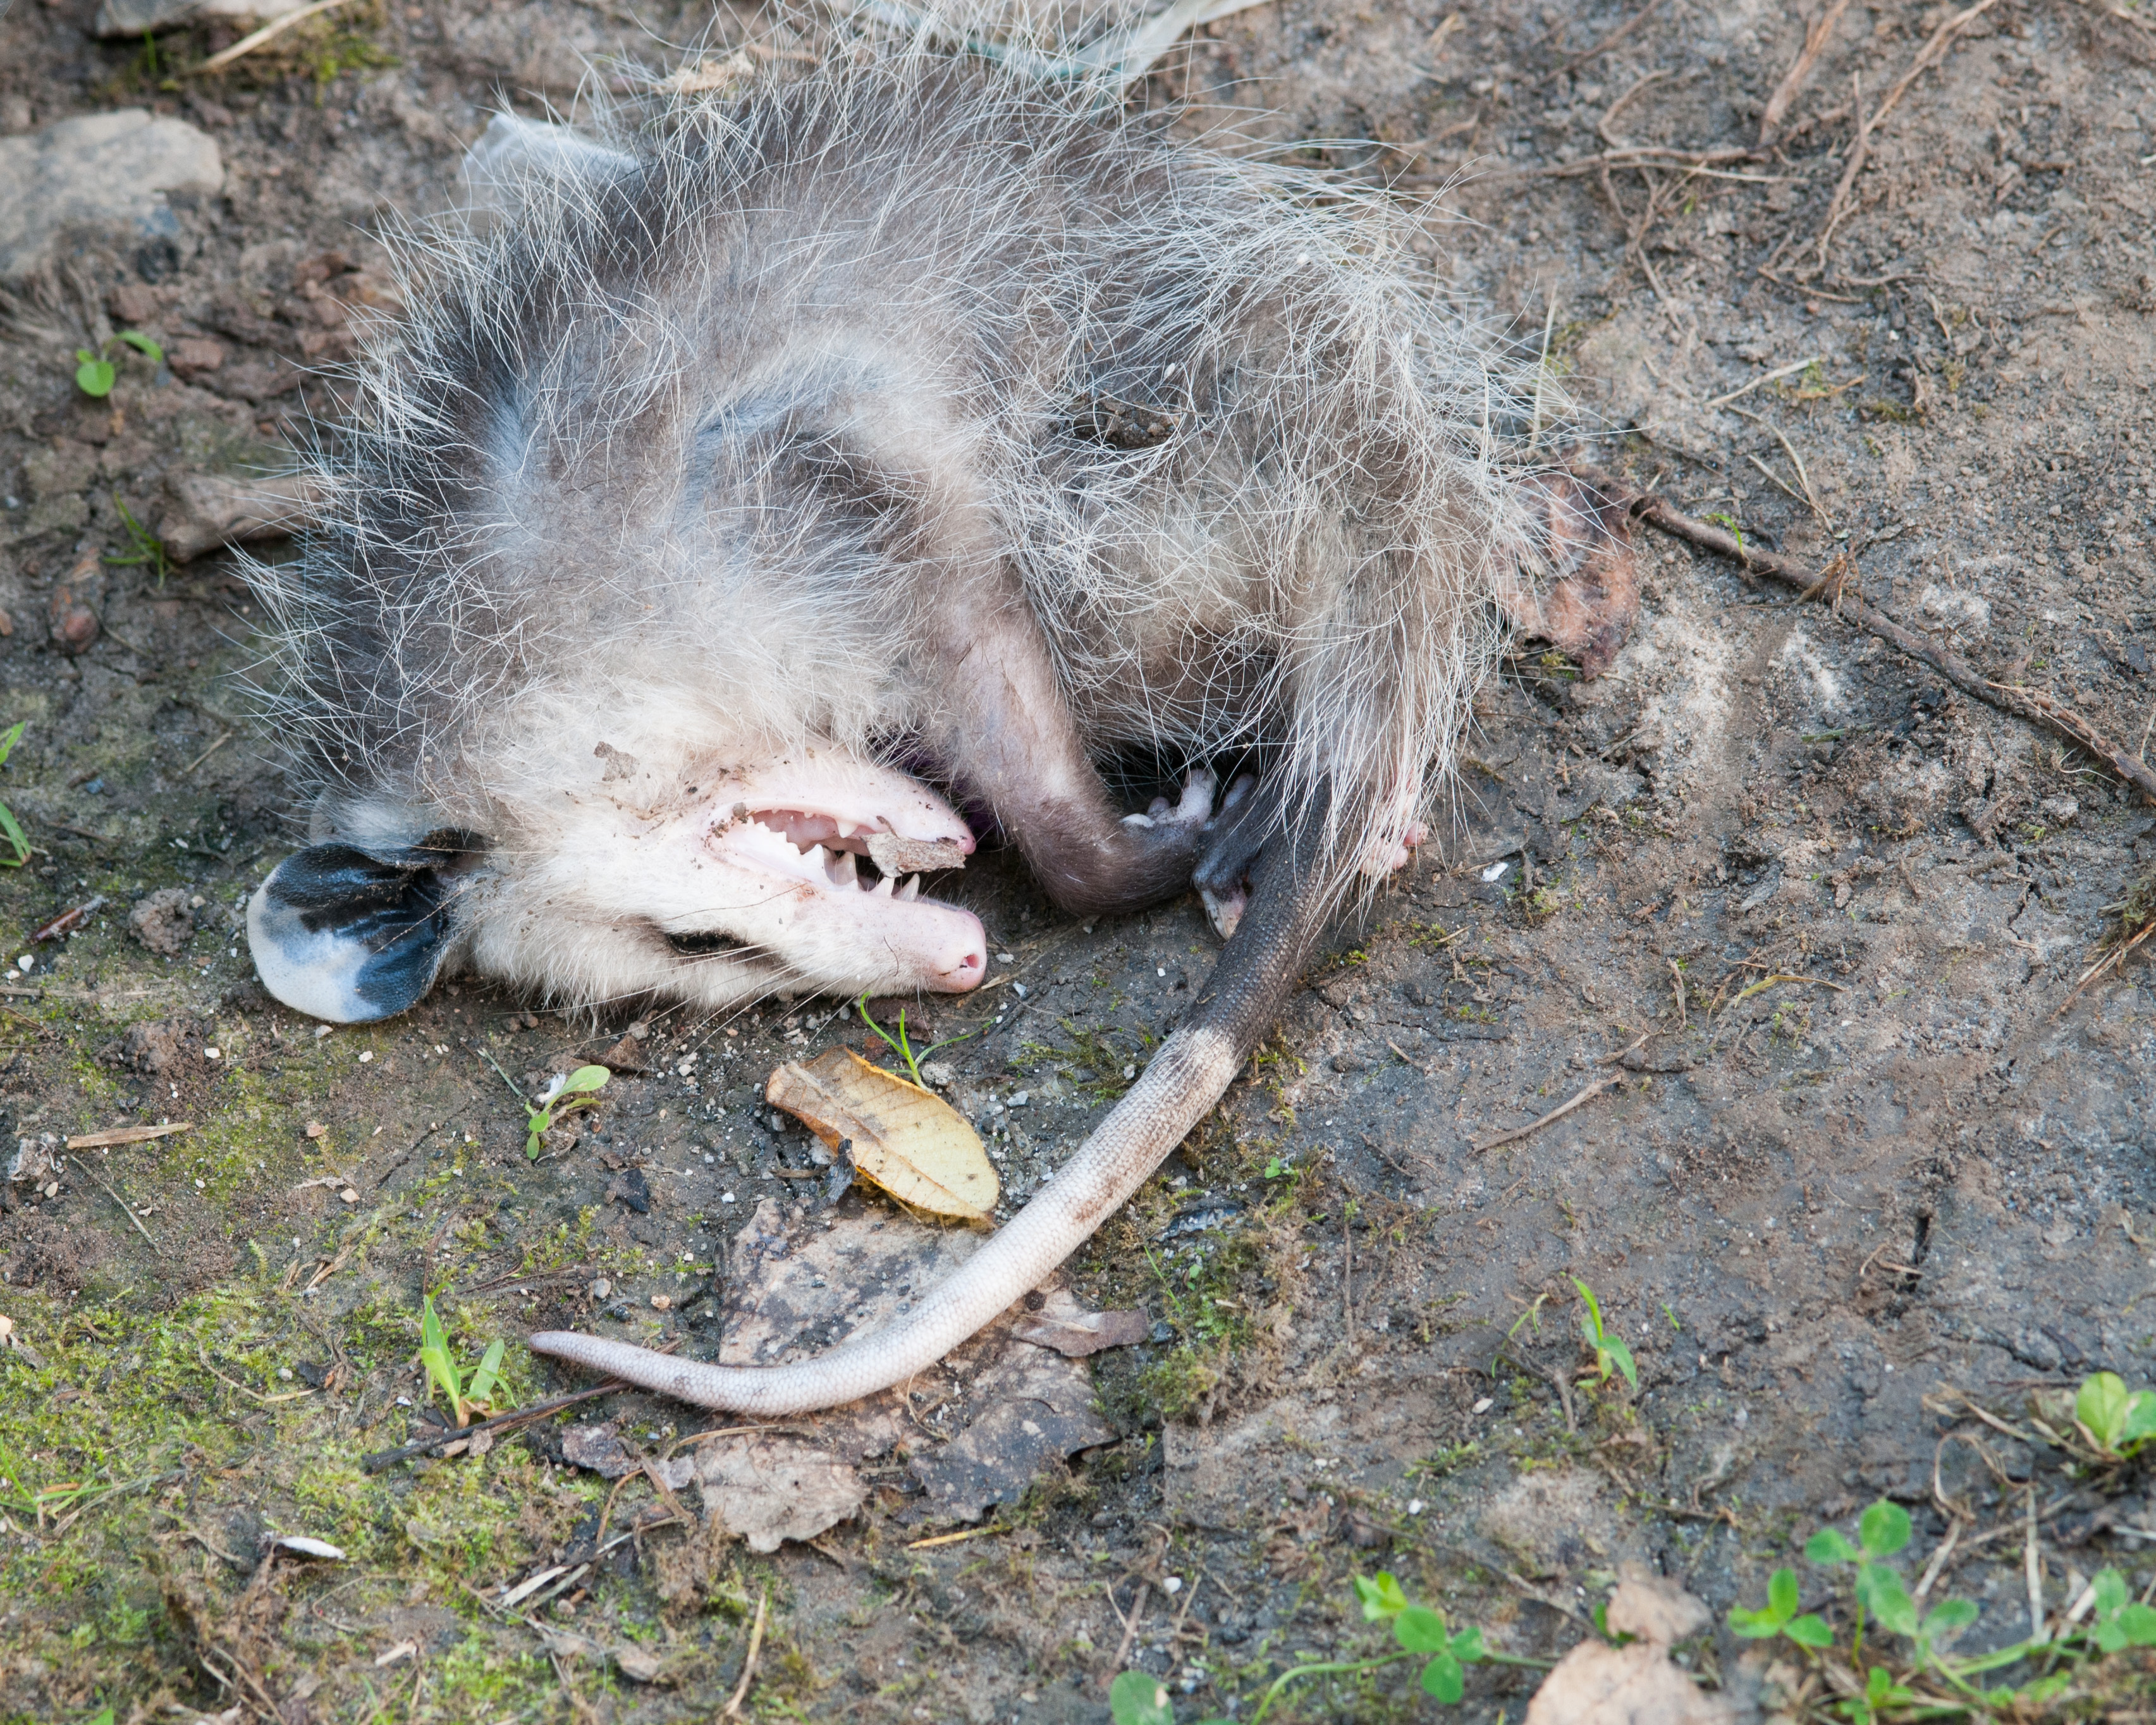 opossum playing dead